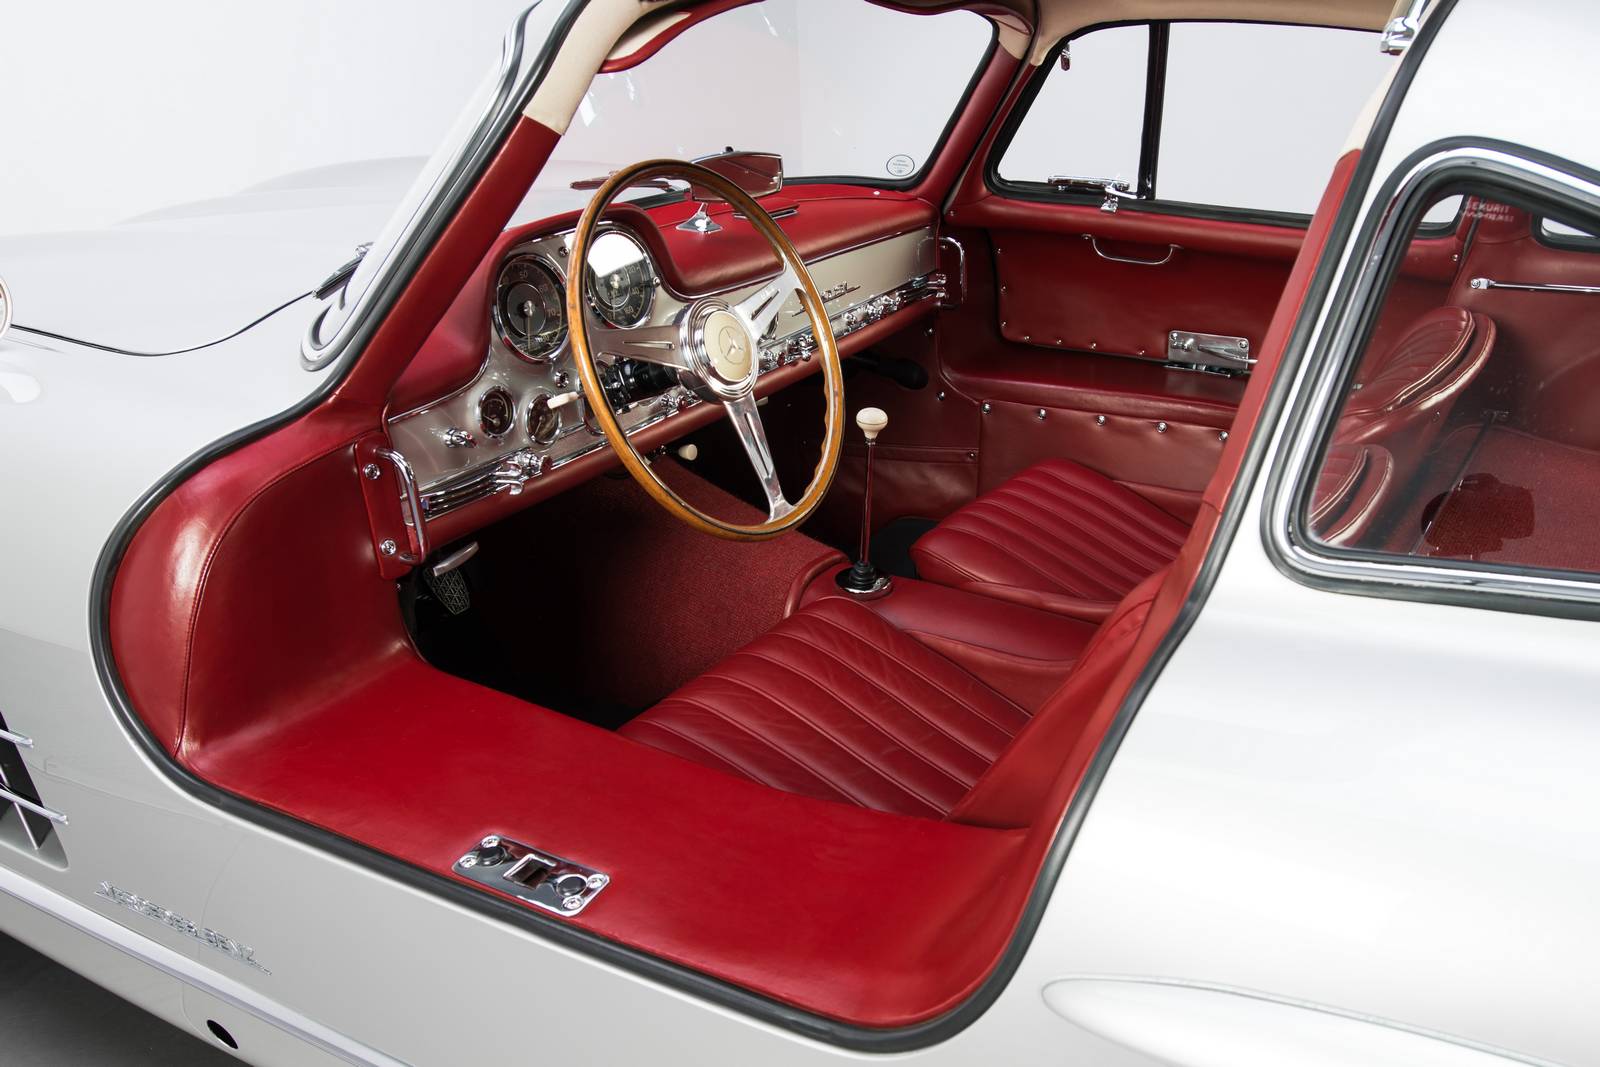 1954 Mercedes-Benz 300SL продан за ошеломляющие $1,9 млн